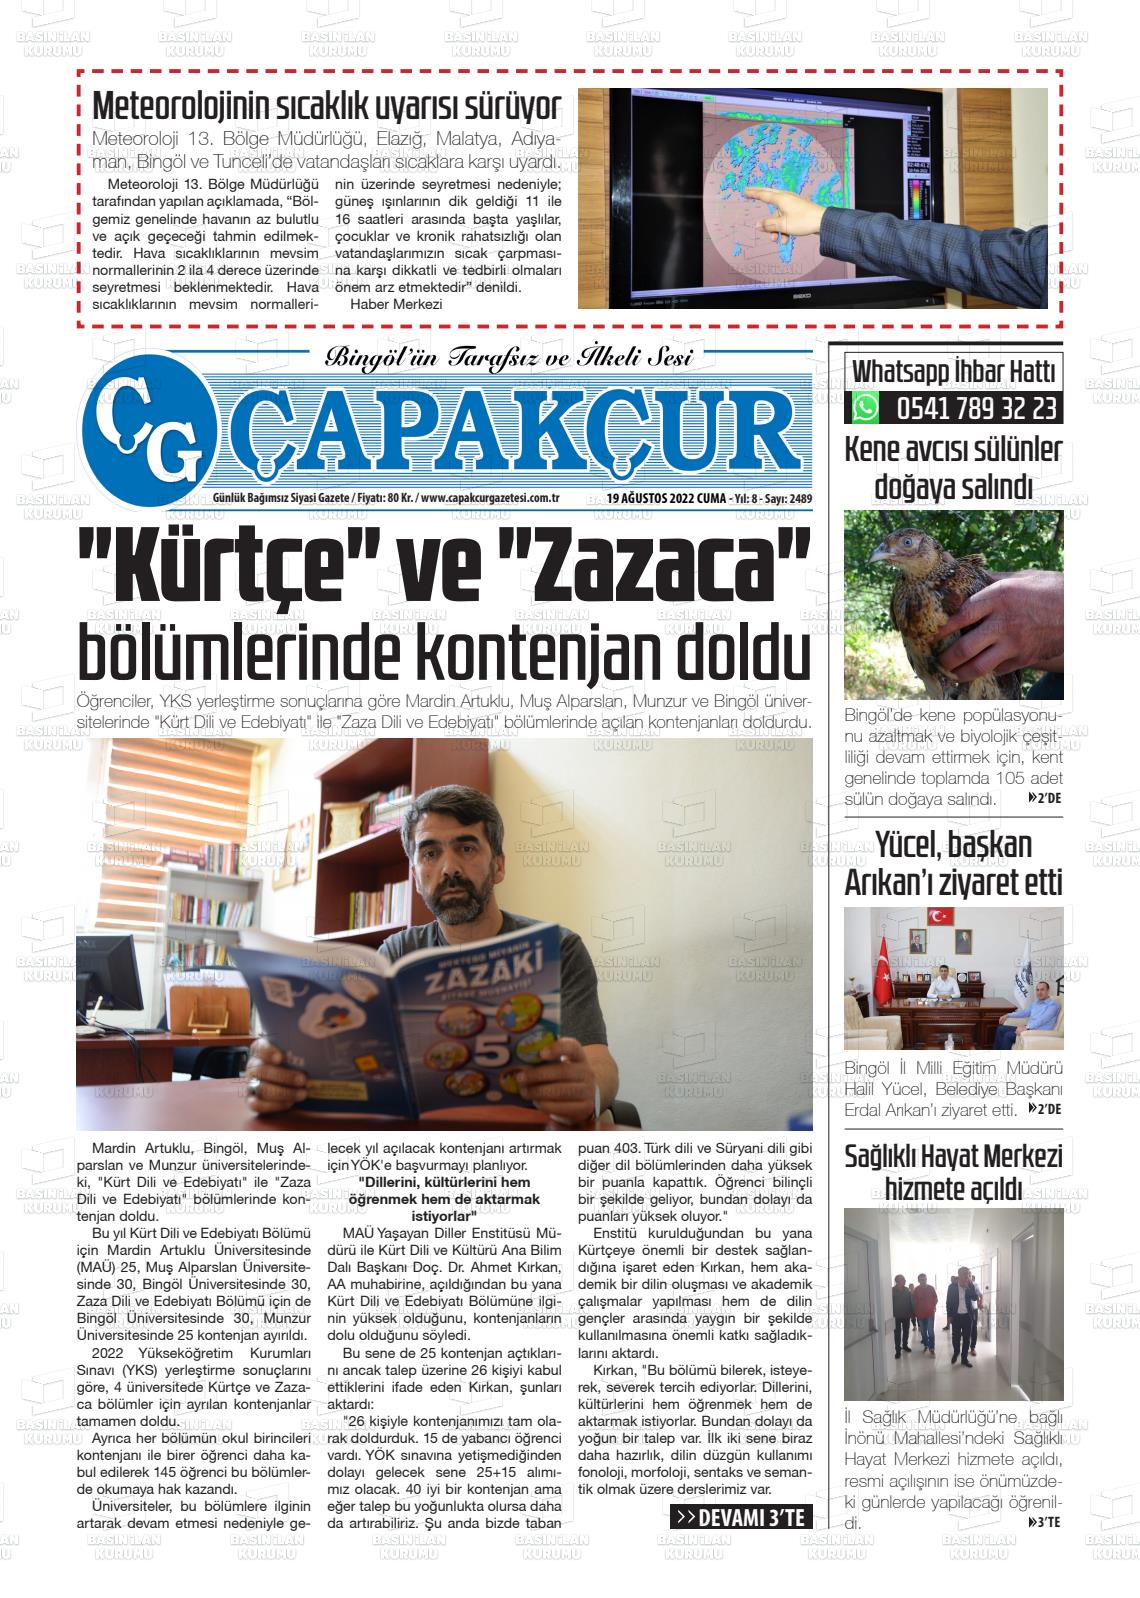 19 Ağustos 2022 Çapakçur Gazete Manşeti